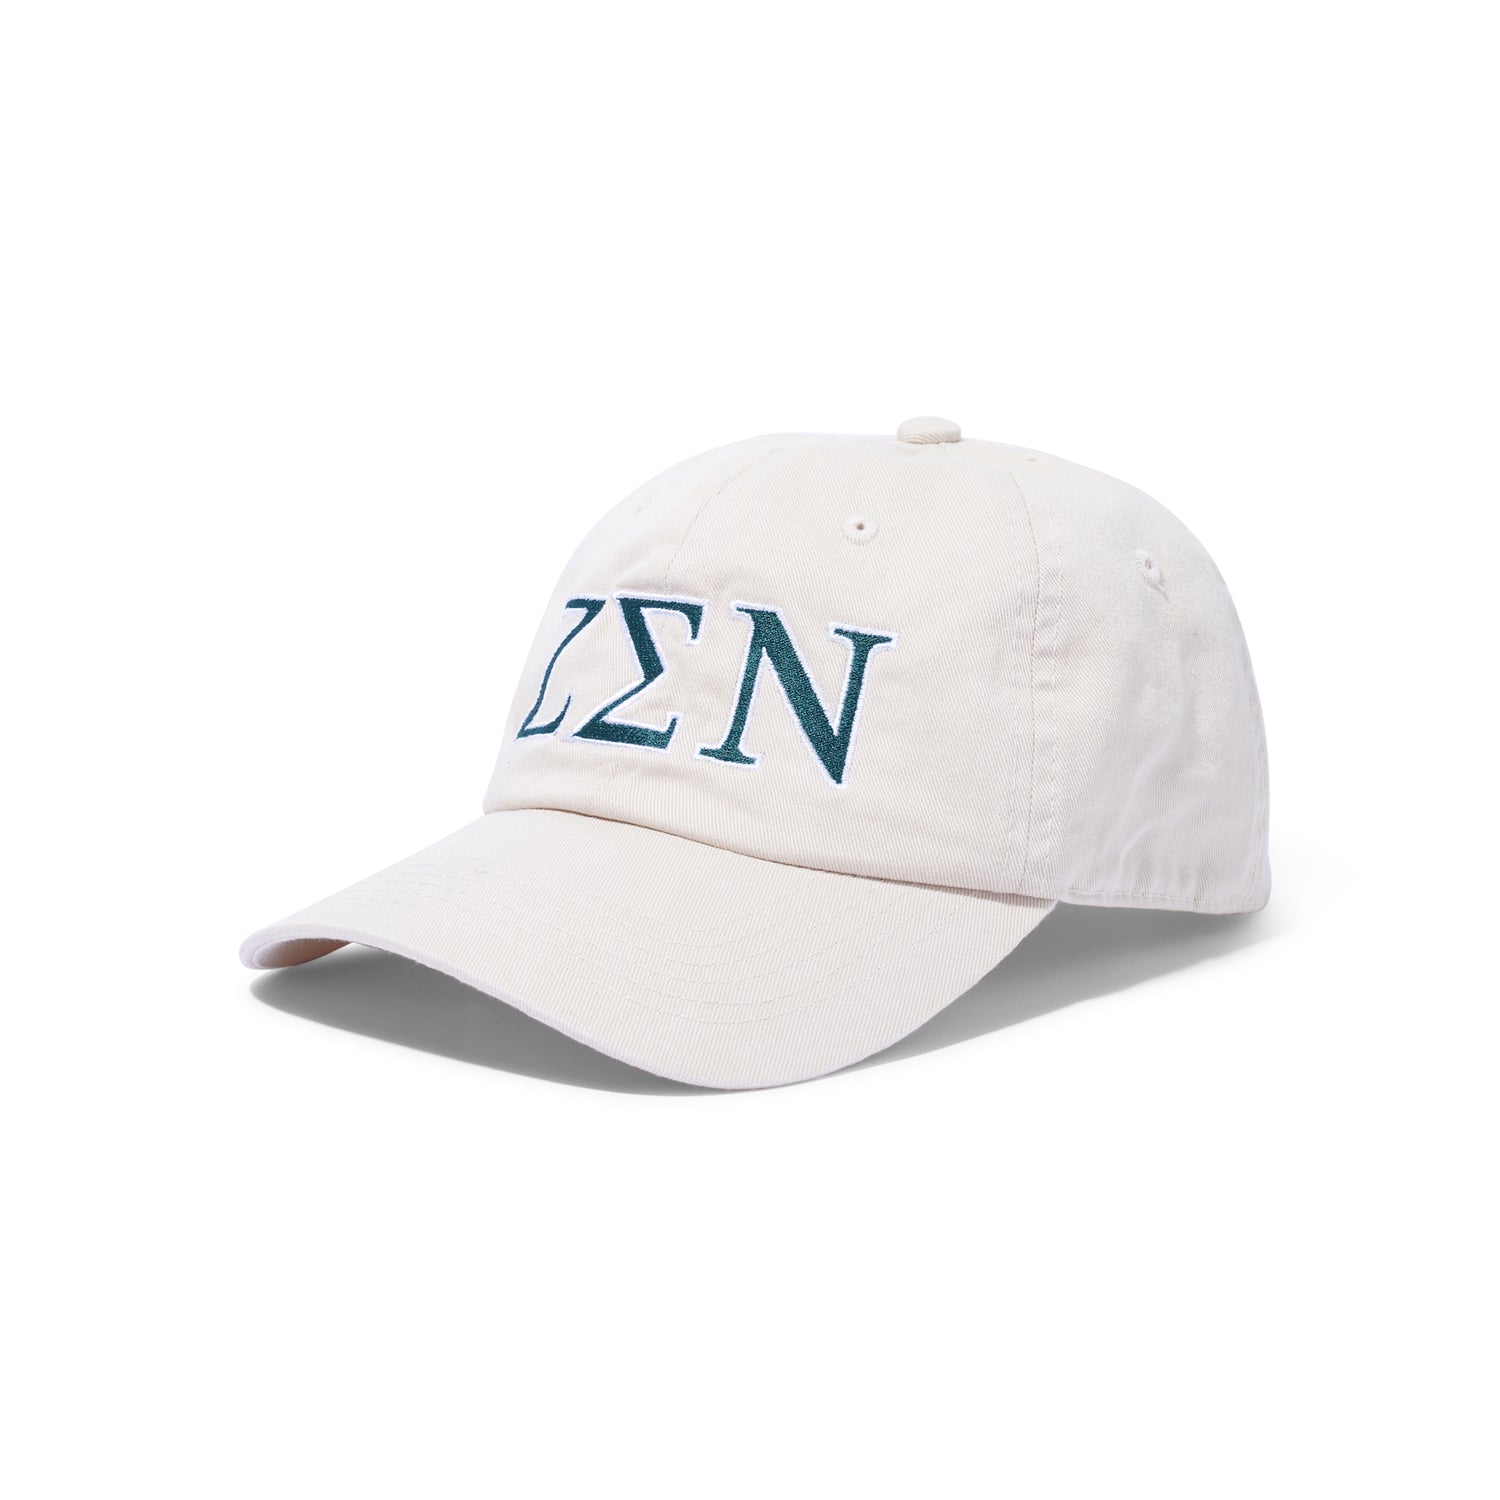 Zen Dad Hat, Bone